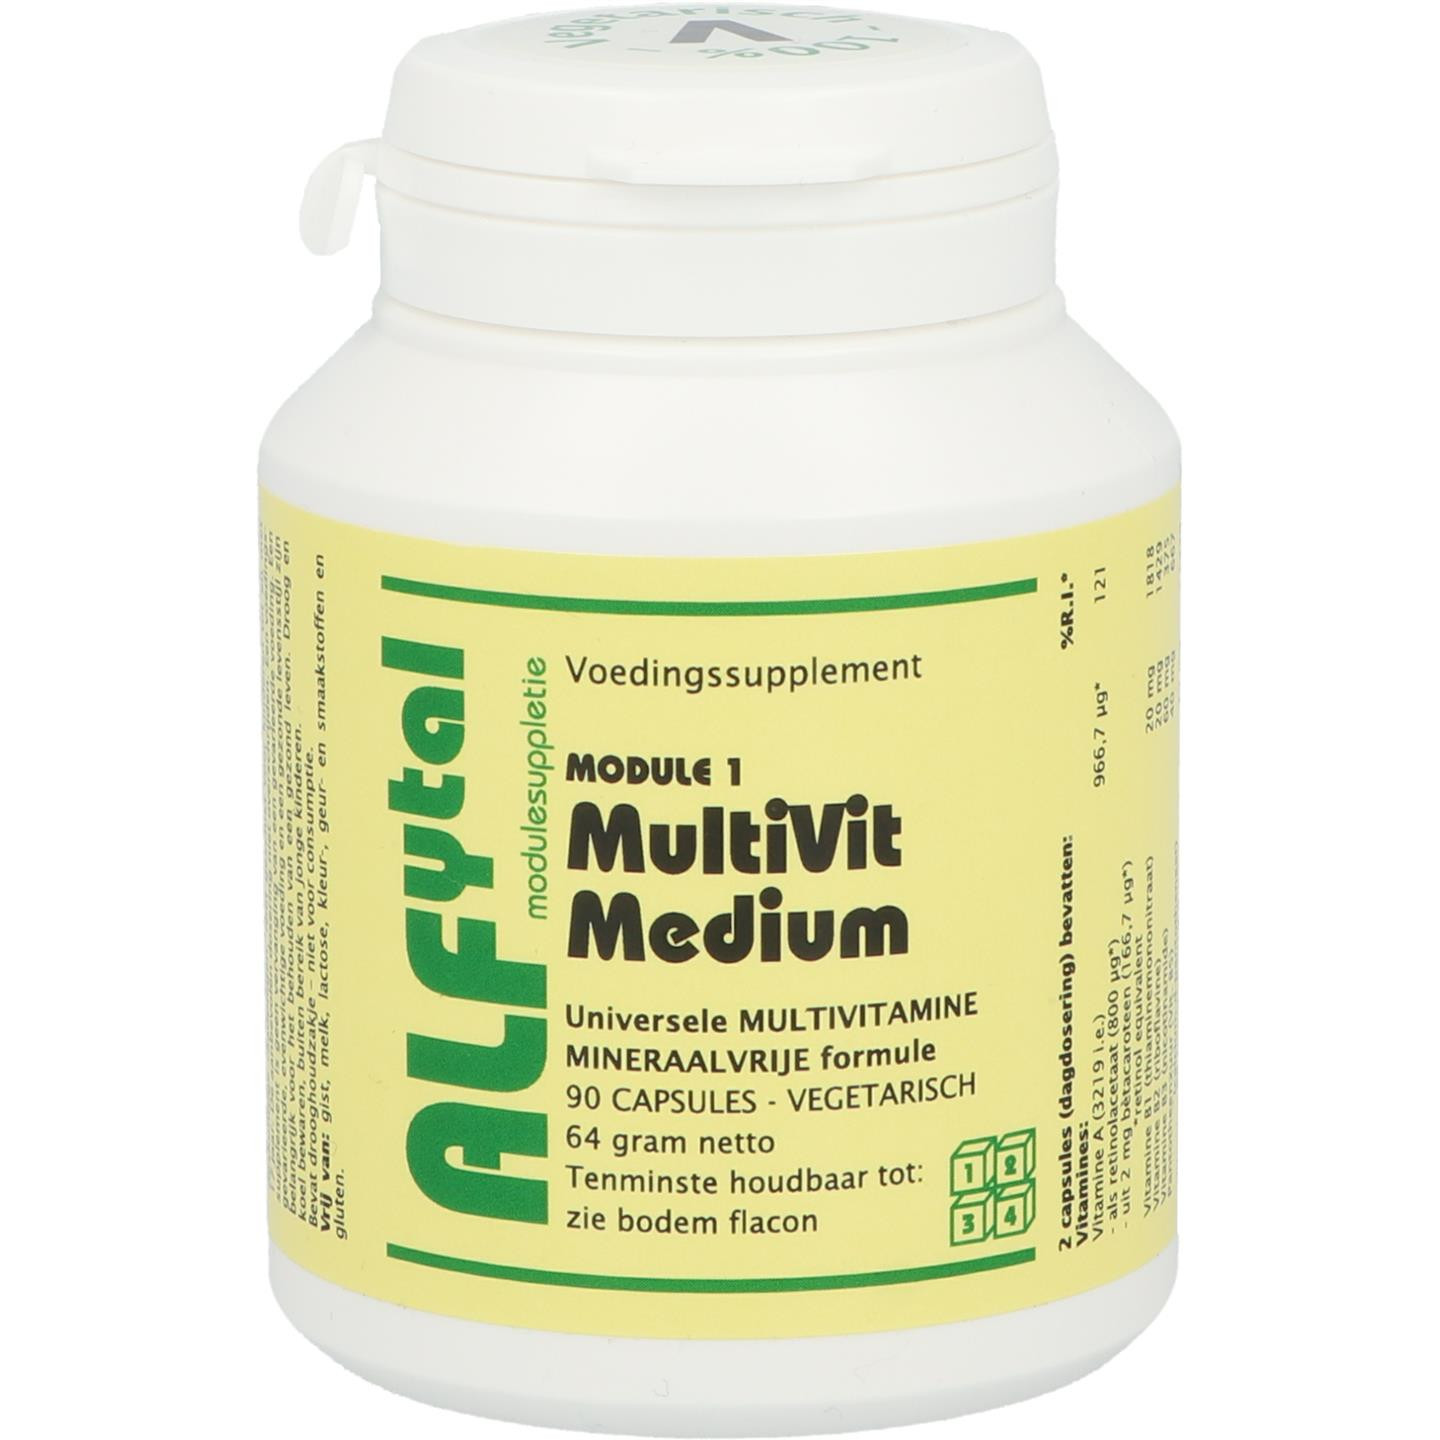 MultiVit Medium (module 1)